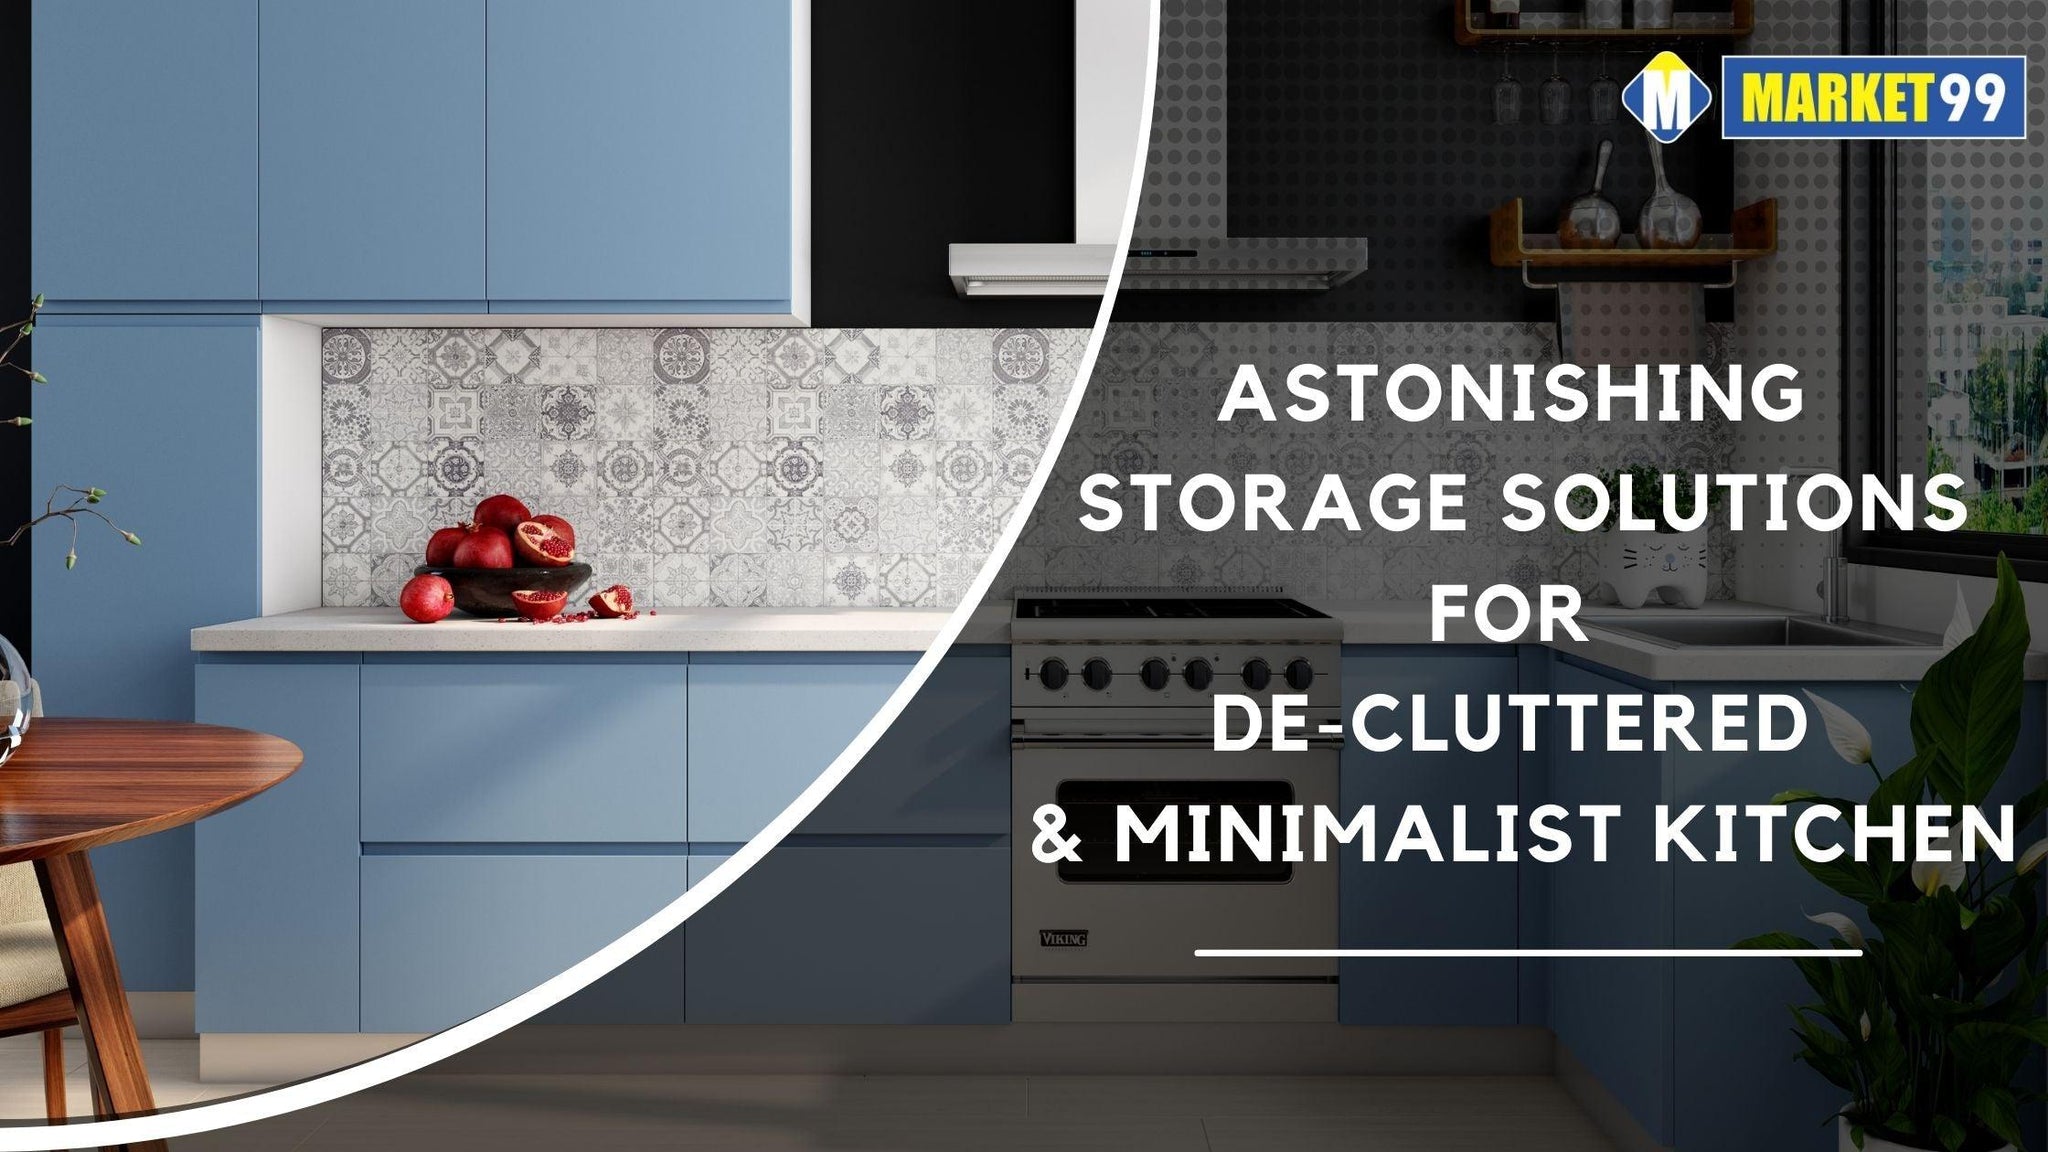 Astonishing Storage Solutions For De-cluttered & Minimalist Kitchen - MARKET 99